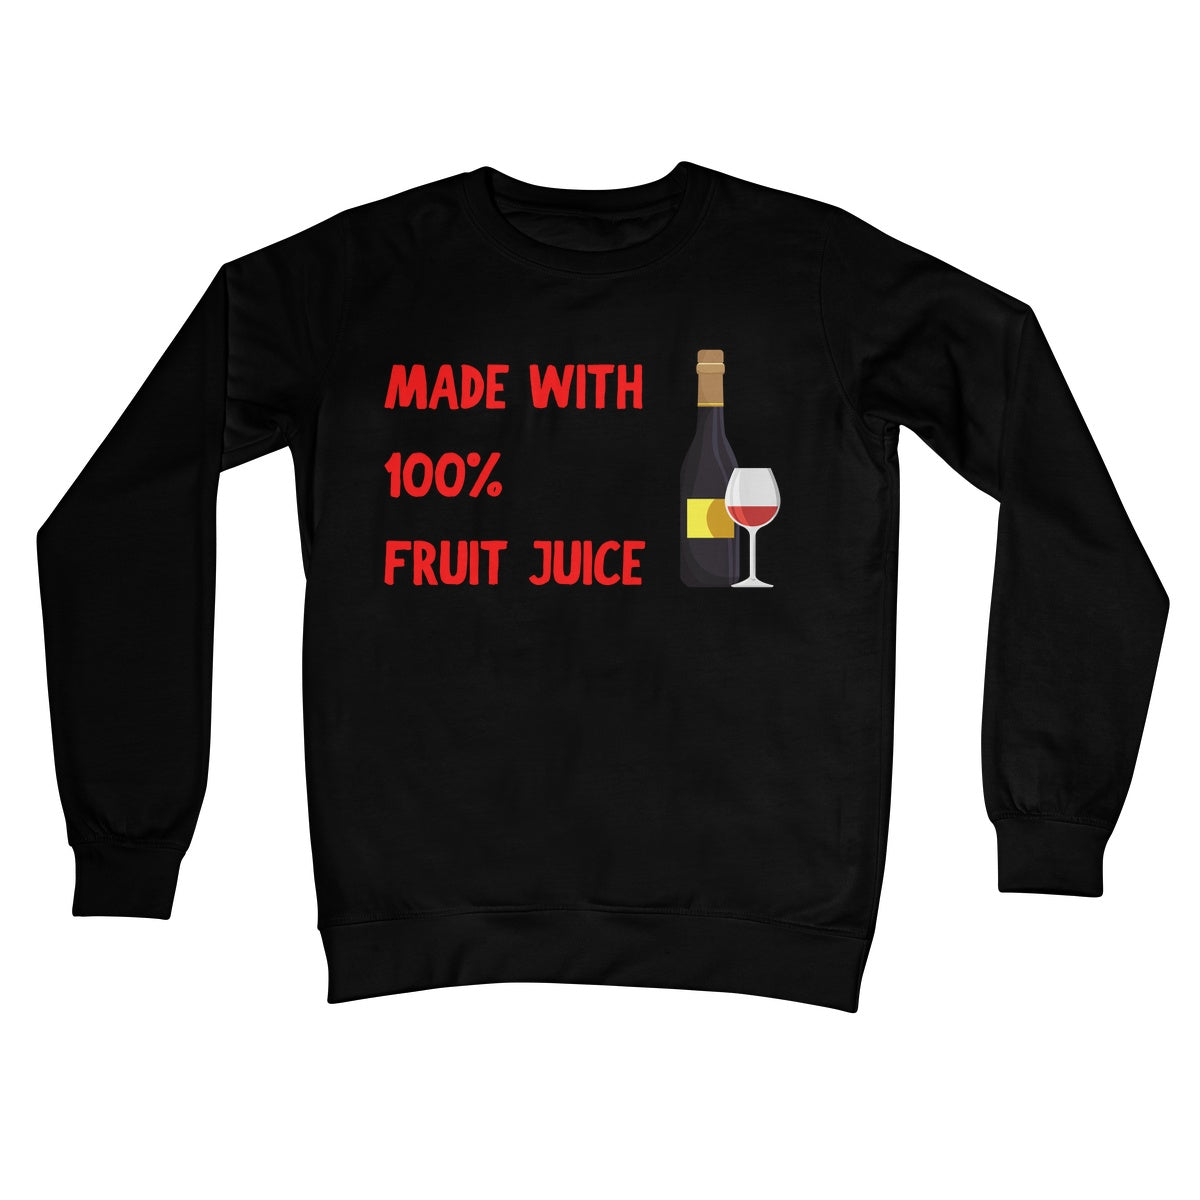 made with 100% fruit juice jumper black